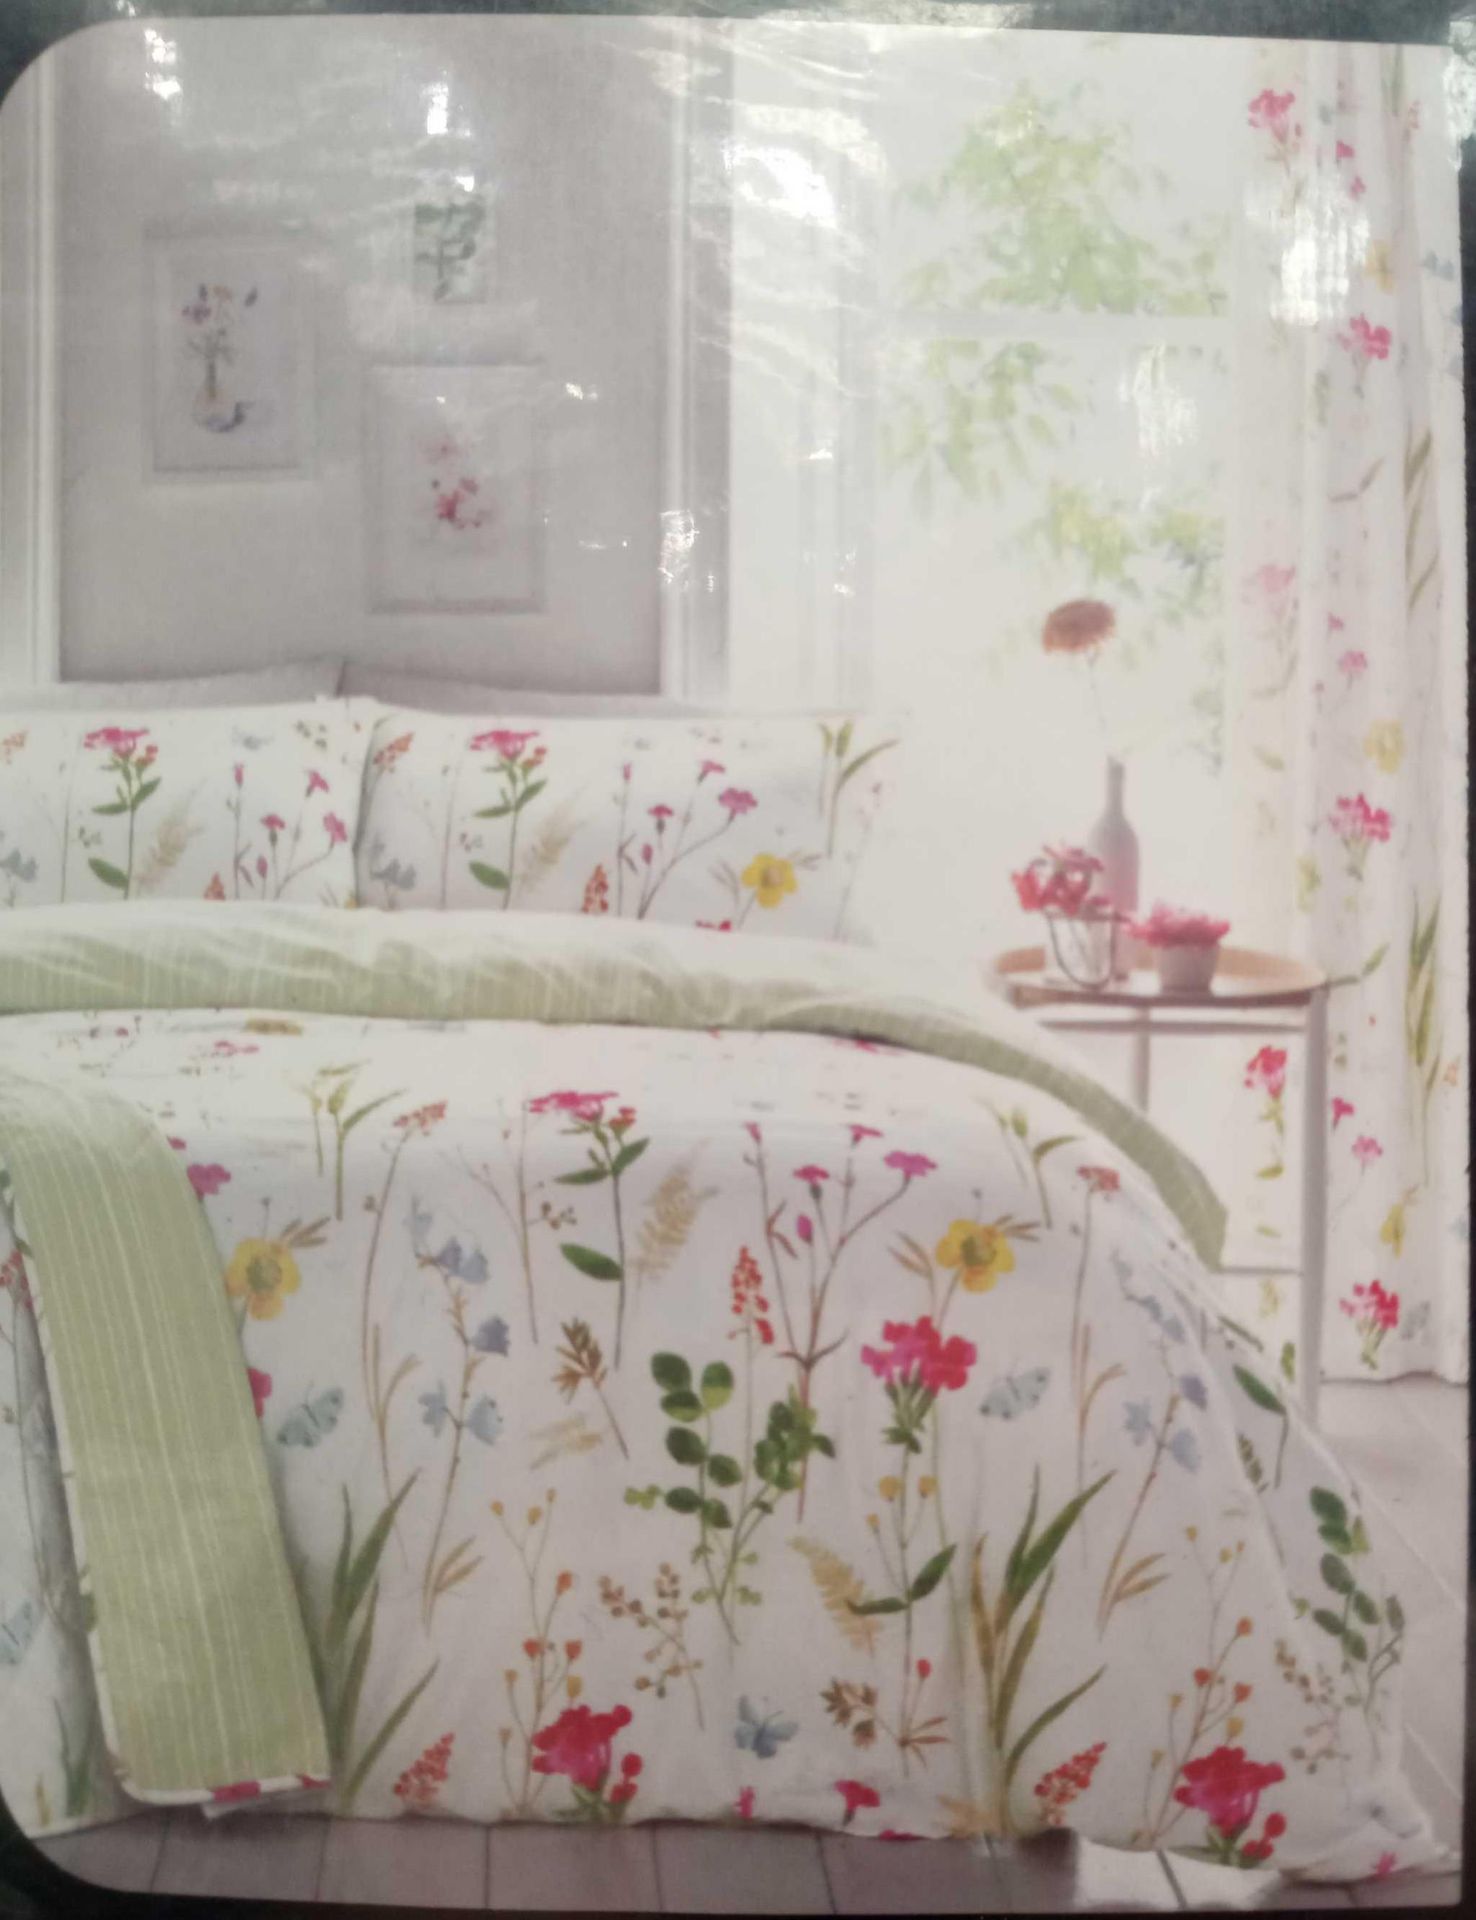 Bagged dreams & drapes floral bedspread